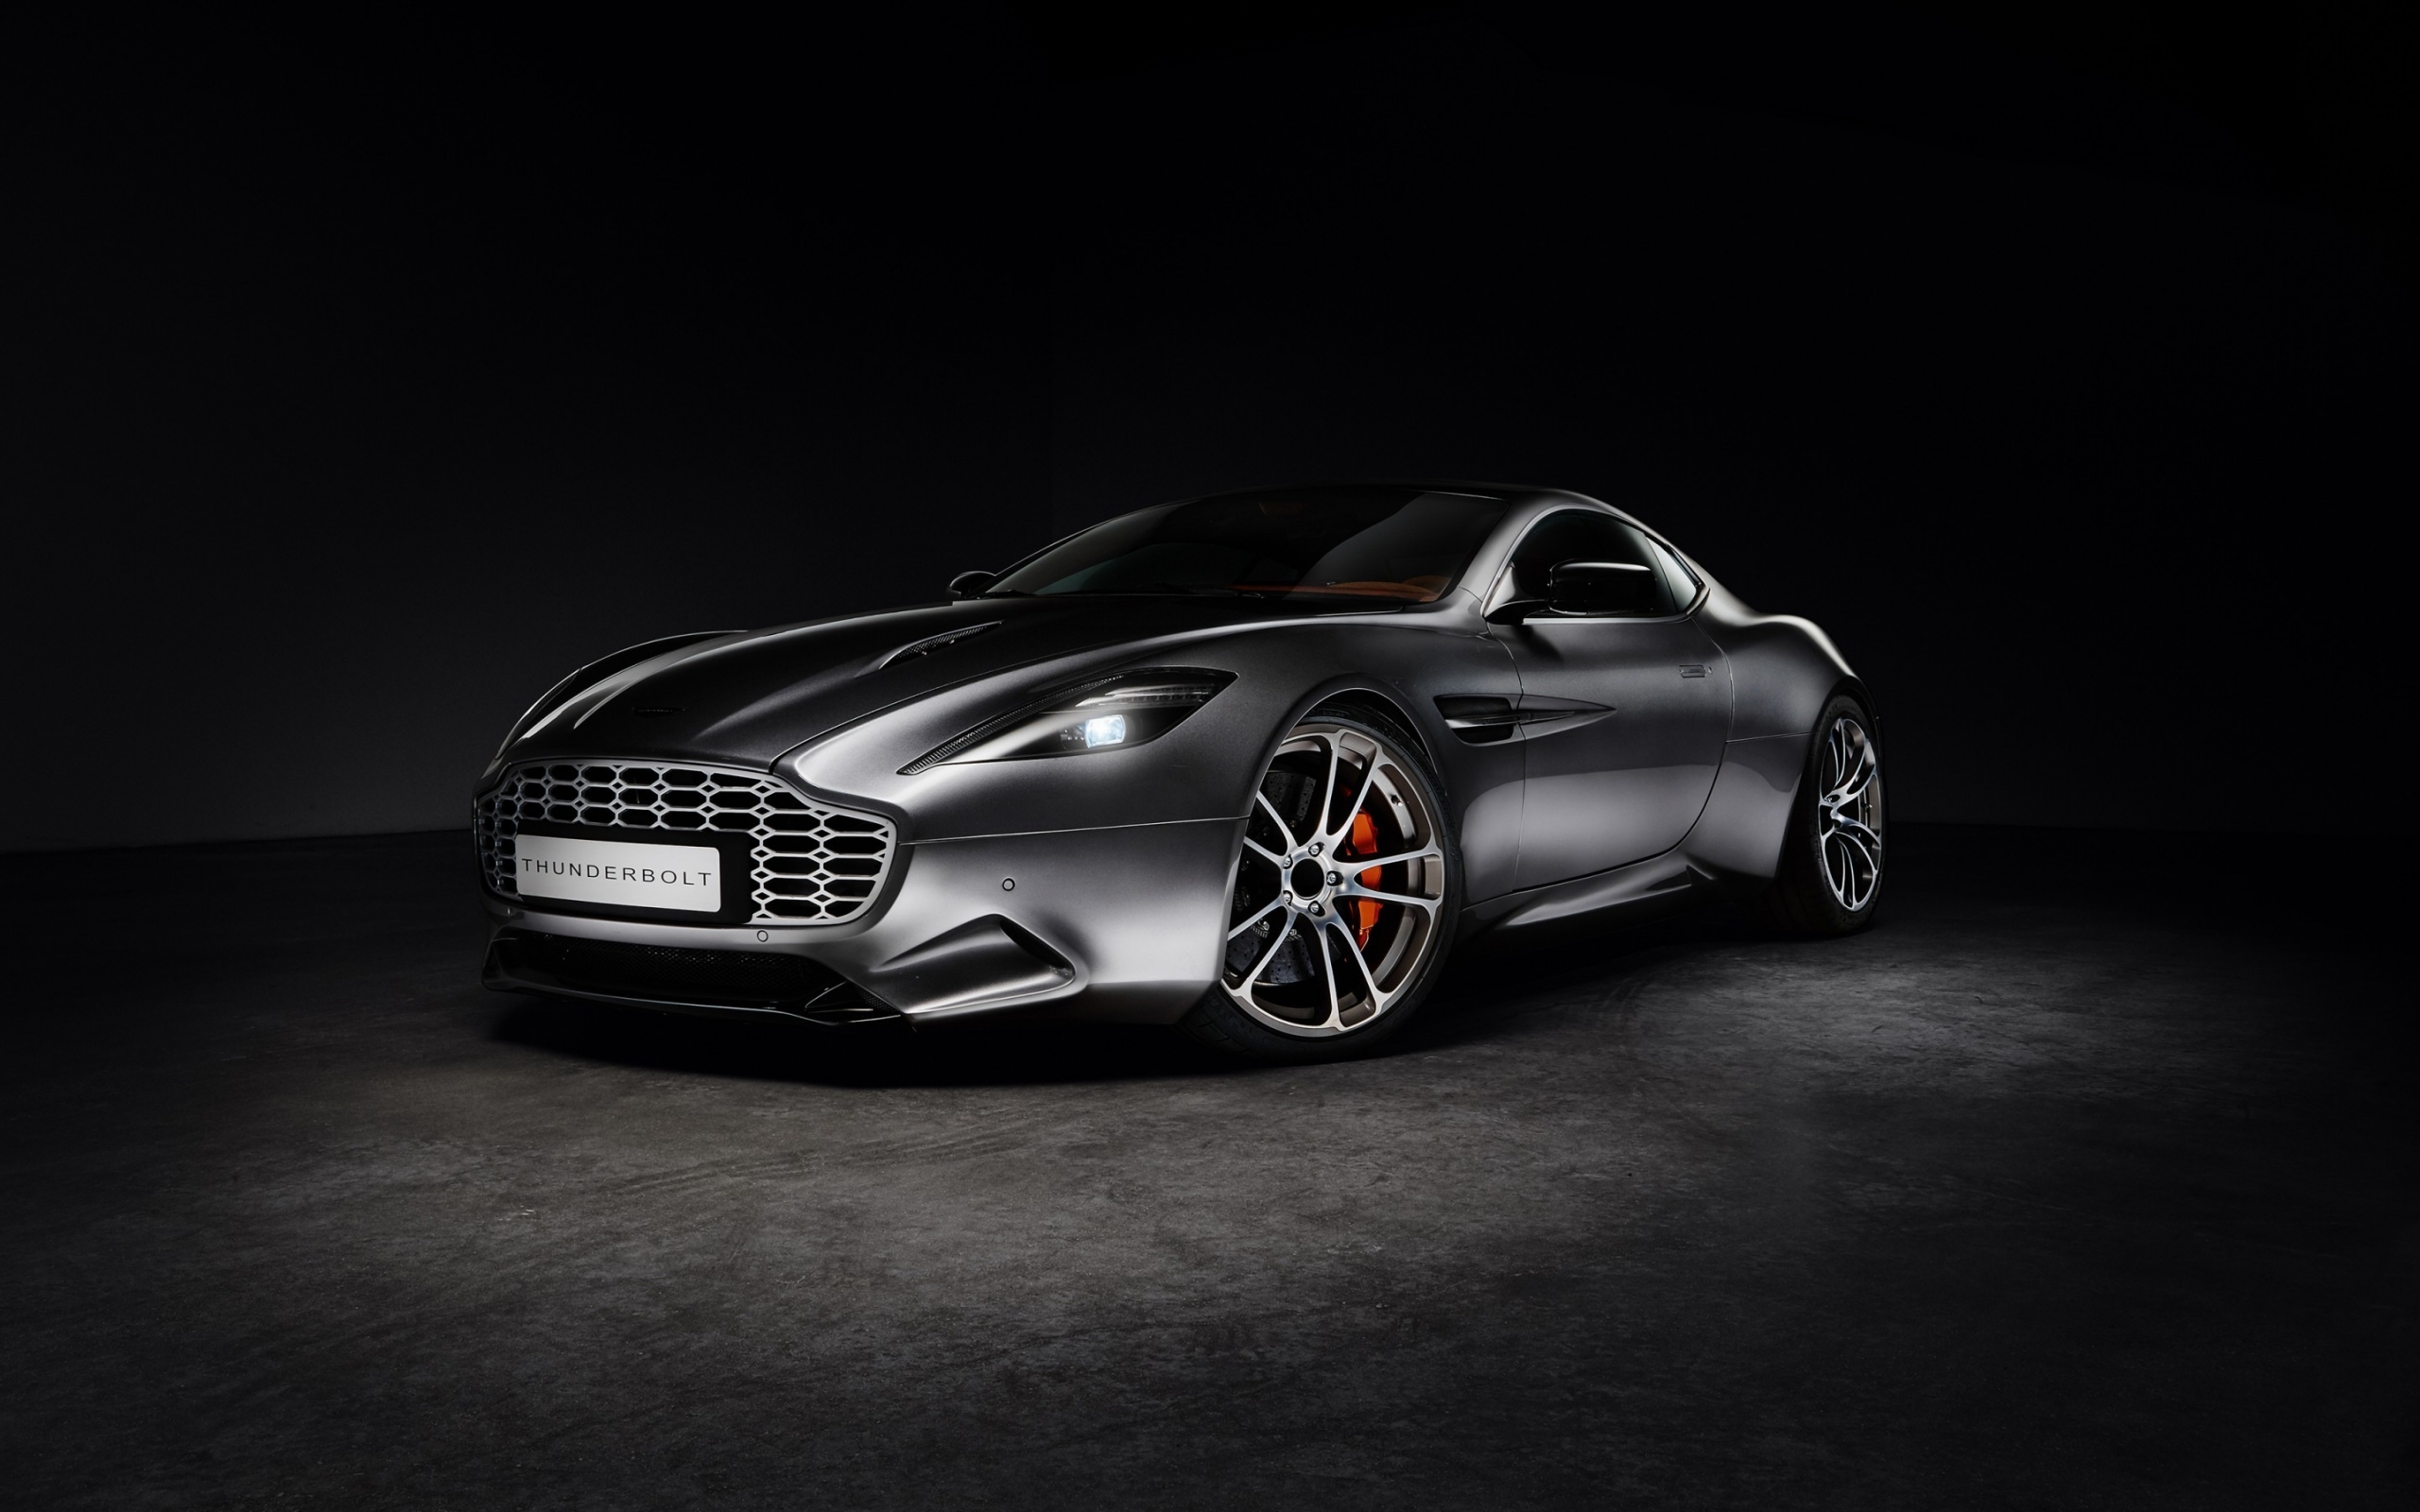 Aston Martin Thunderbolt for 2560 x 1600 widescreen resolution